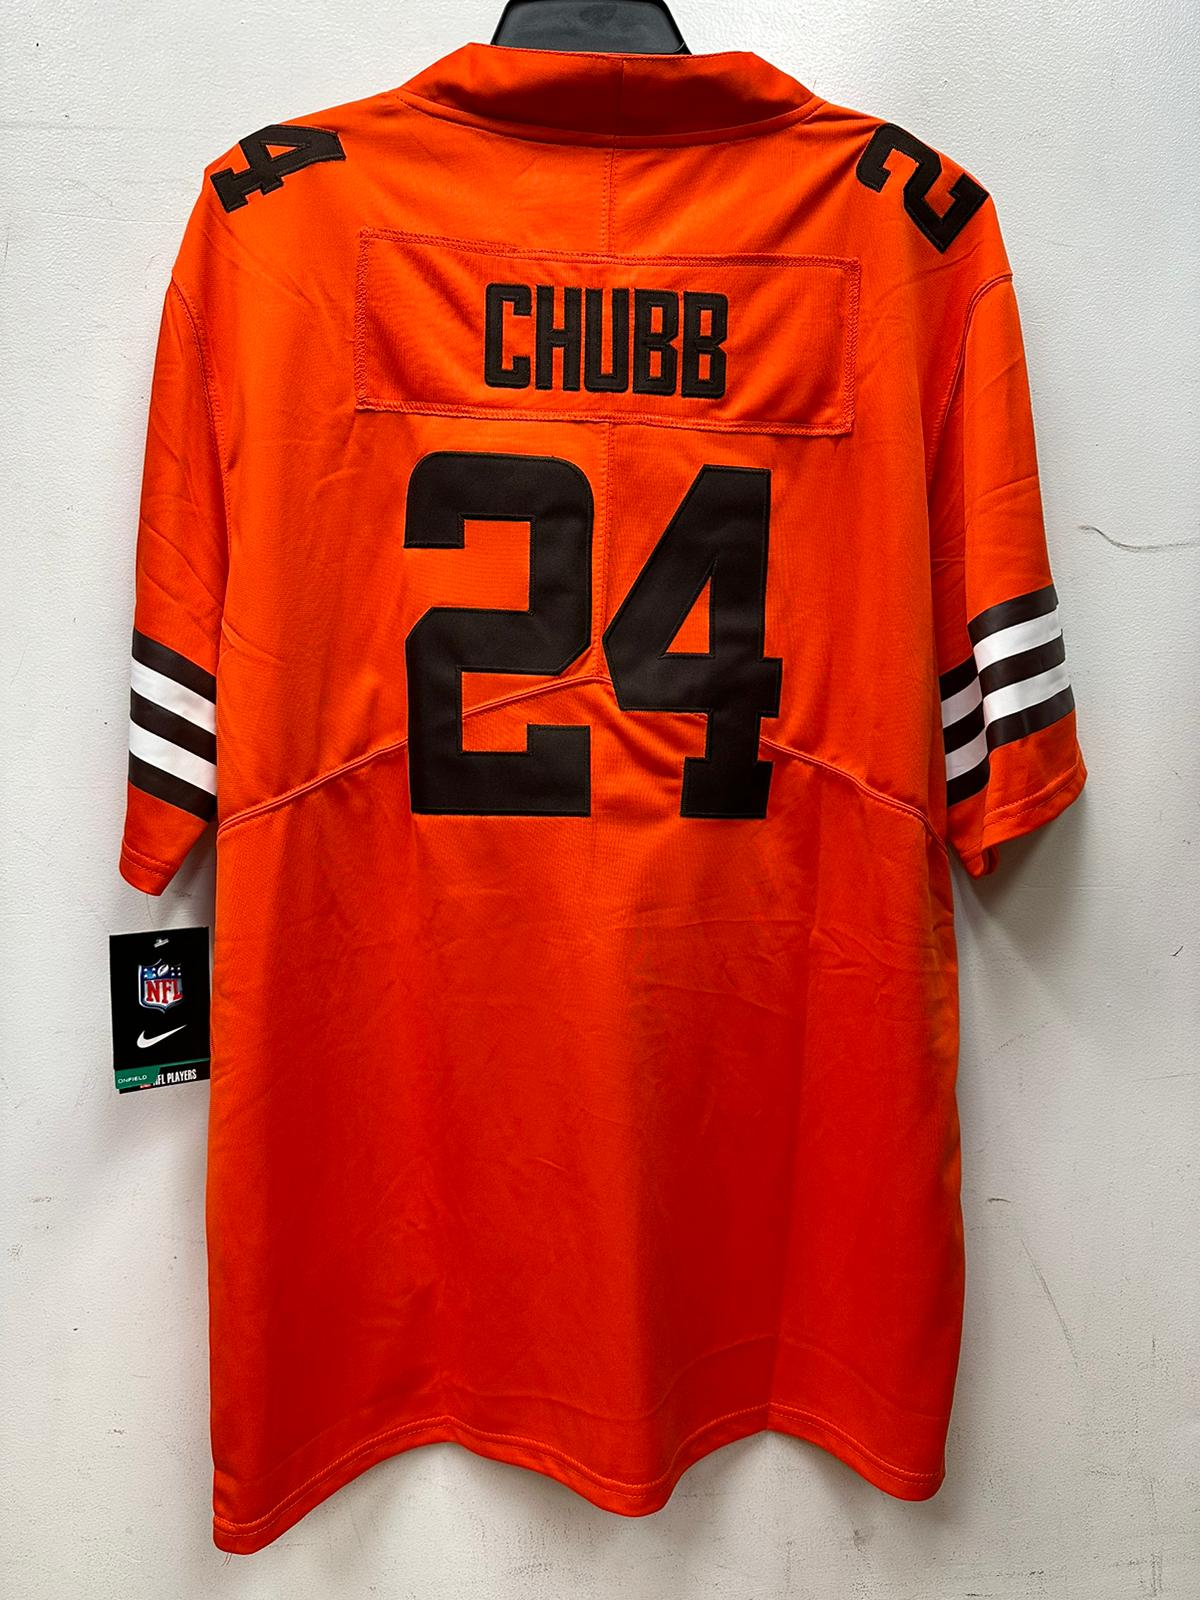 Nick Chubb Jerseys, Nick Chubb Shirts, Apparel, Gear